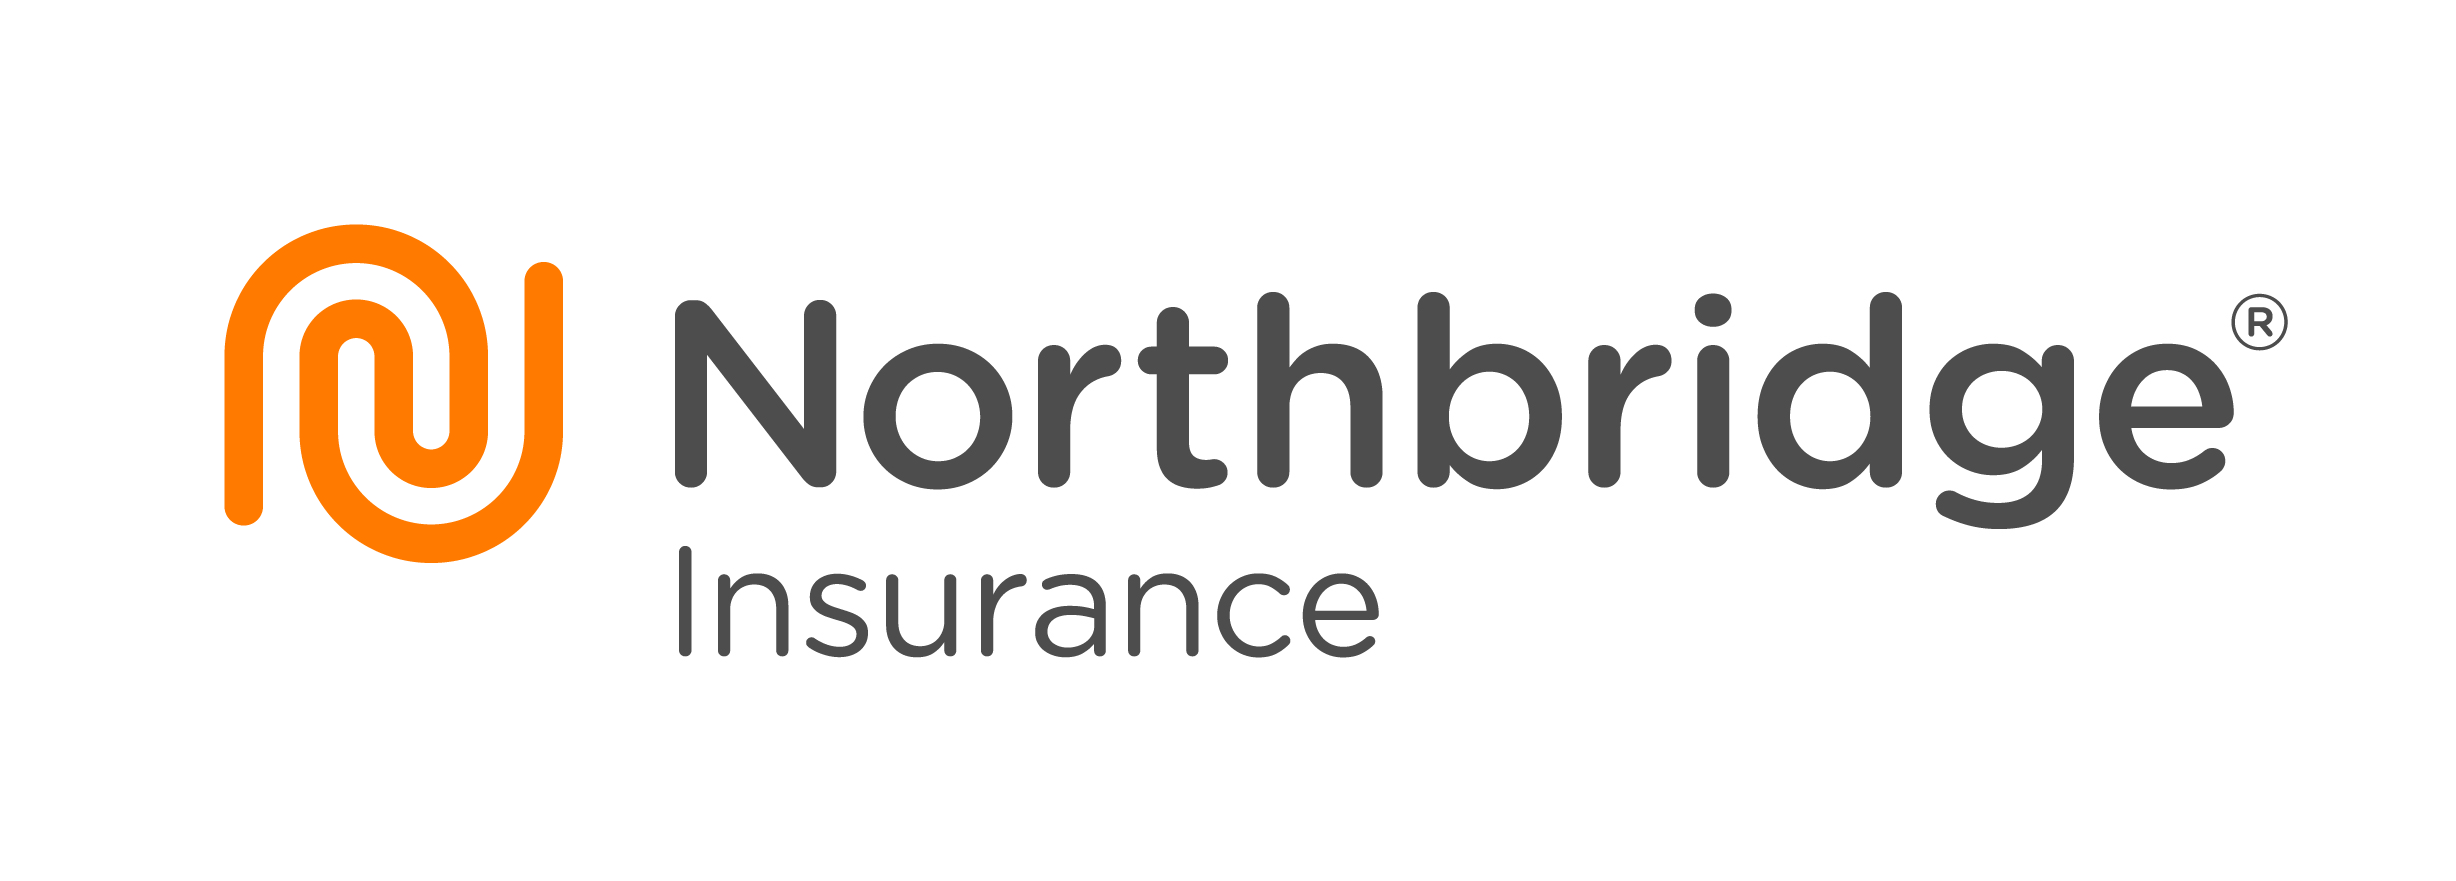 Northbridge Insurance Corporation